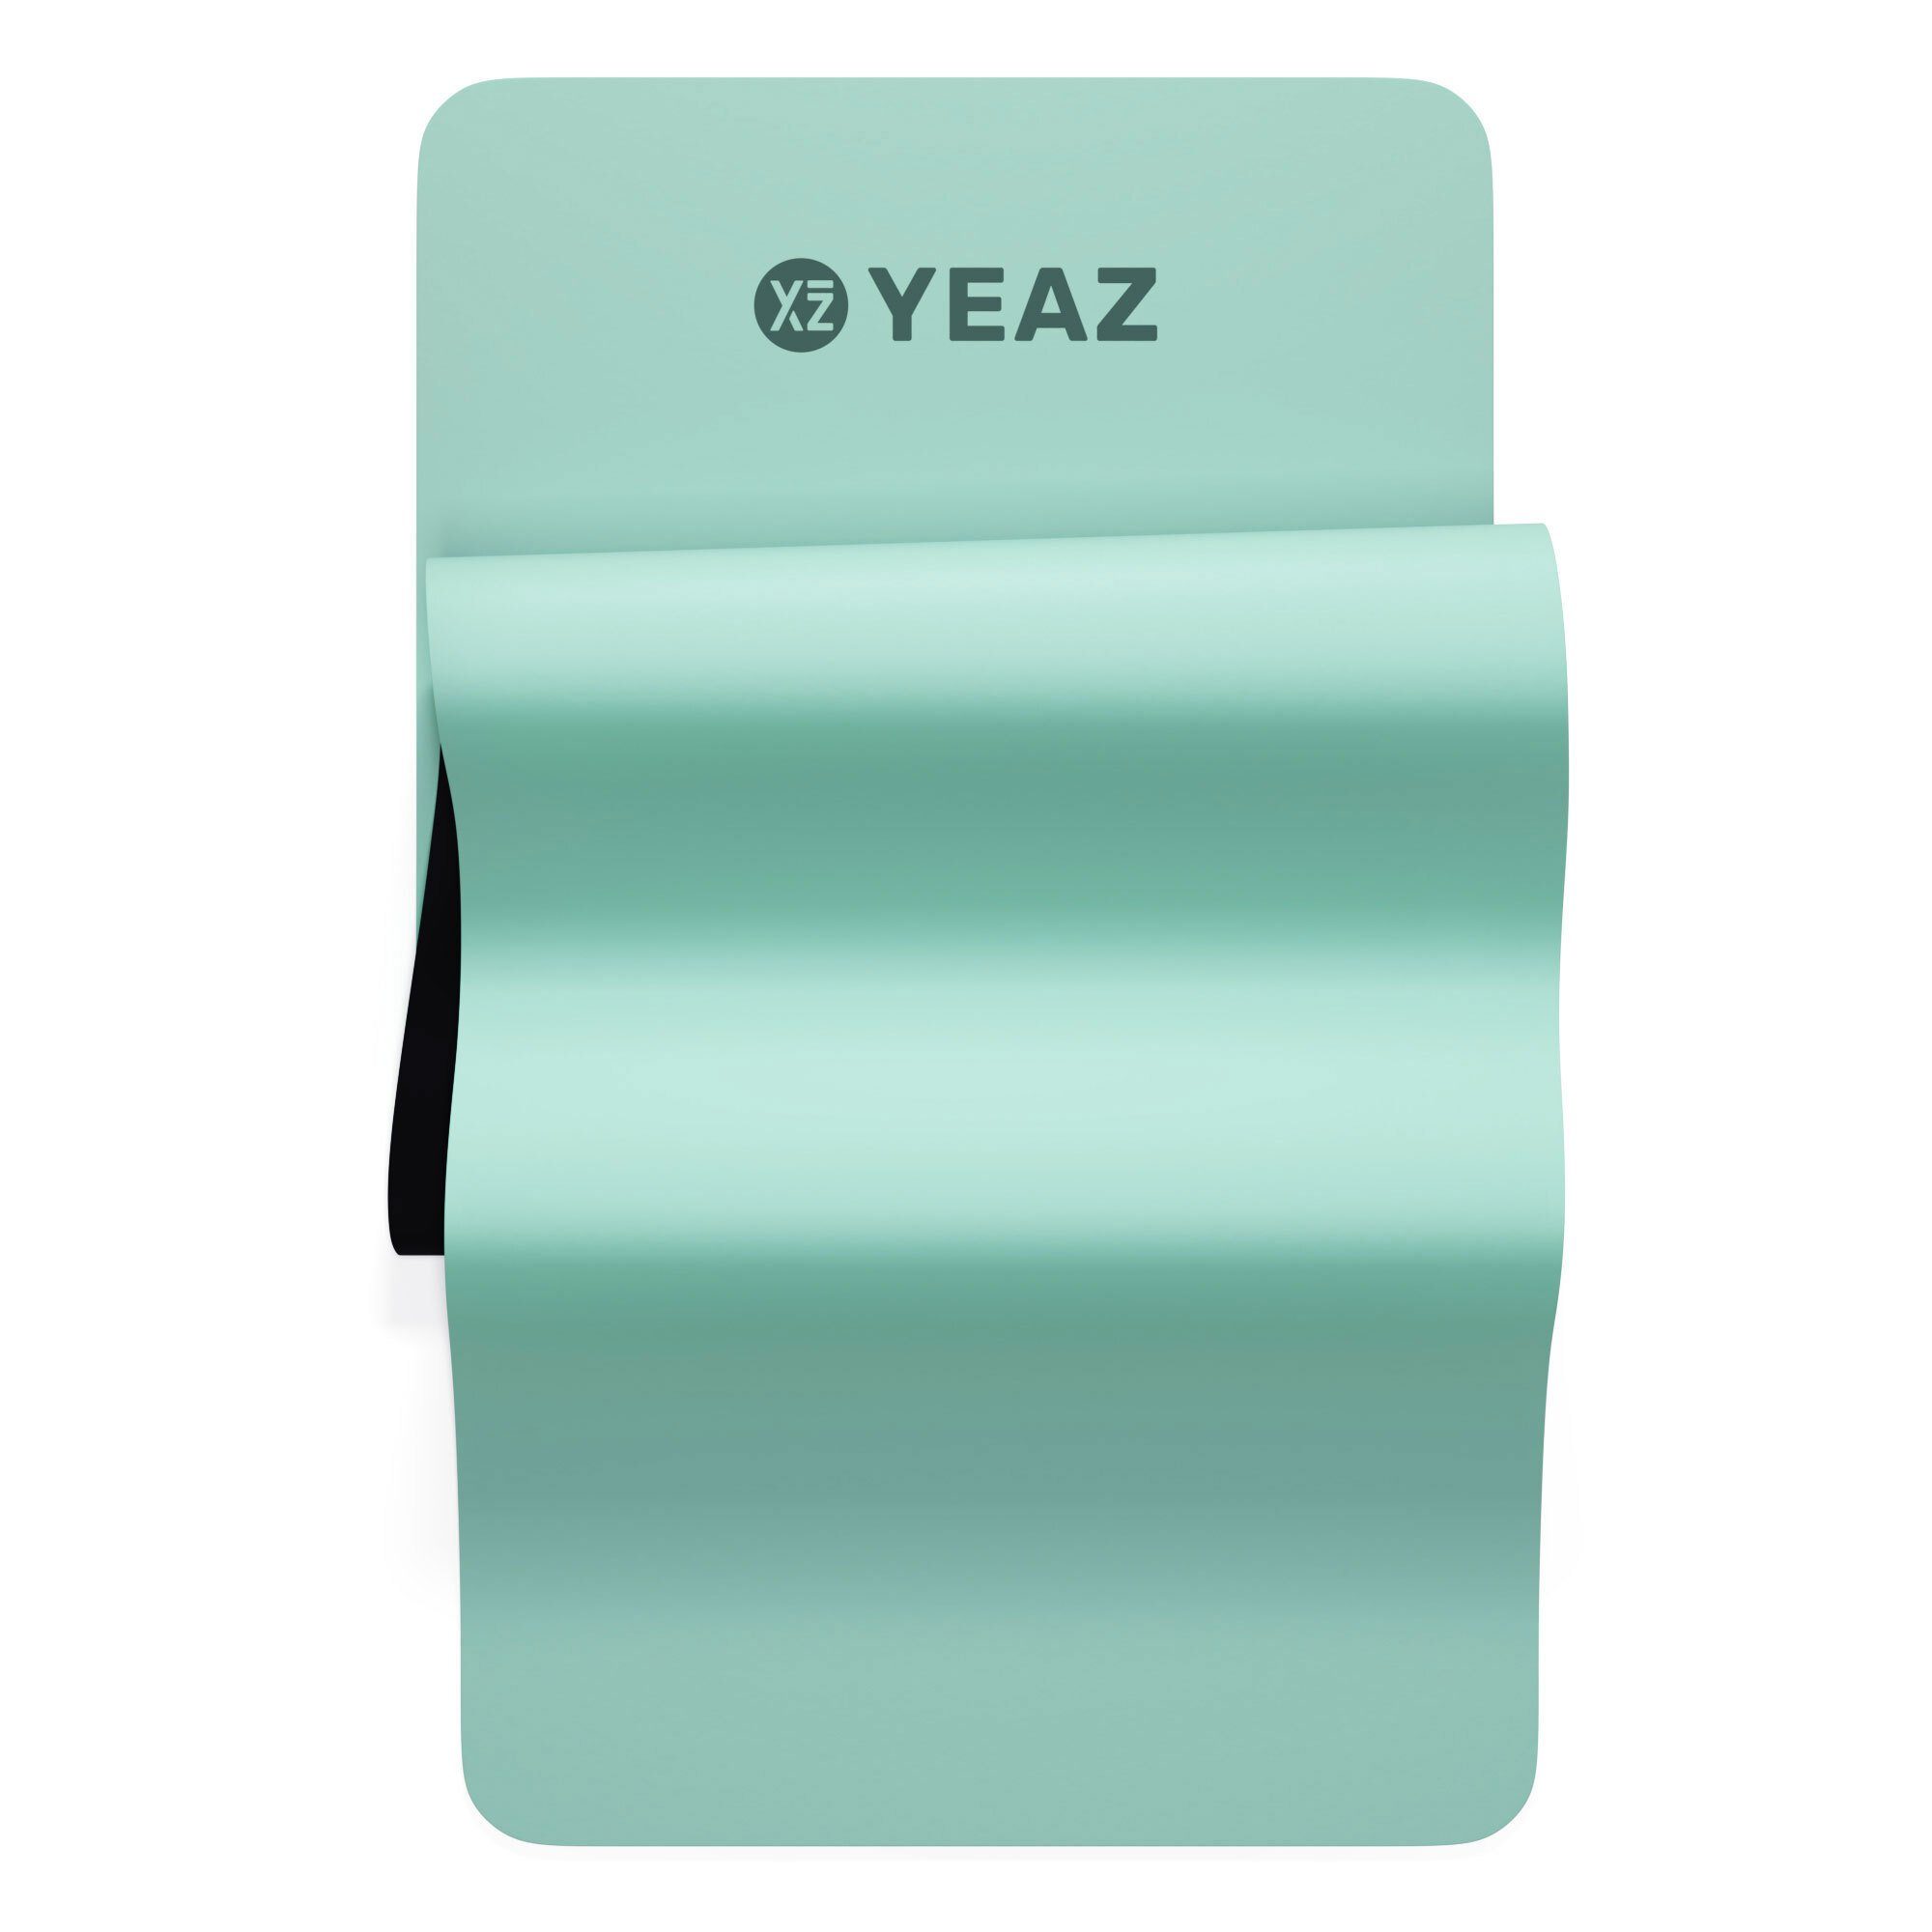 CARESS grün matte & - YEAZ set Yogamatte handtuch